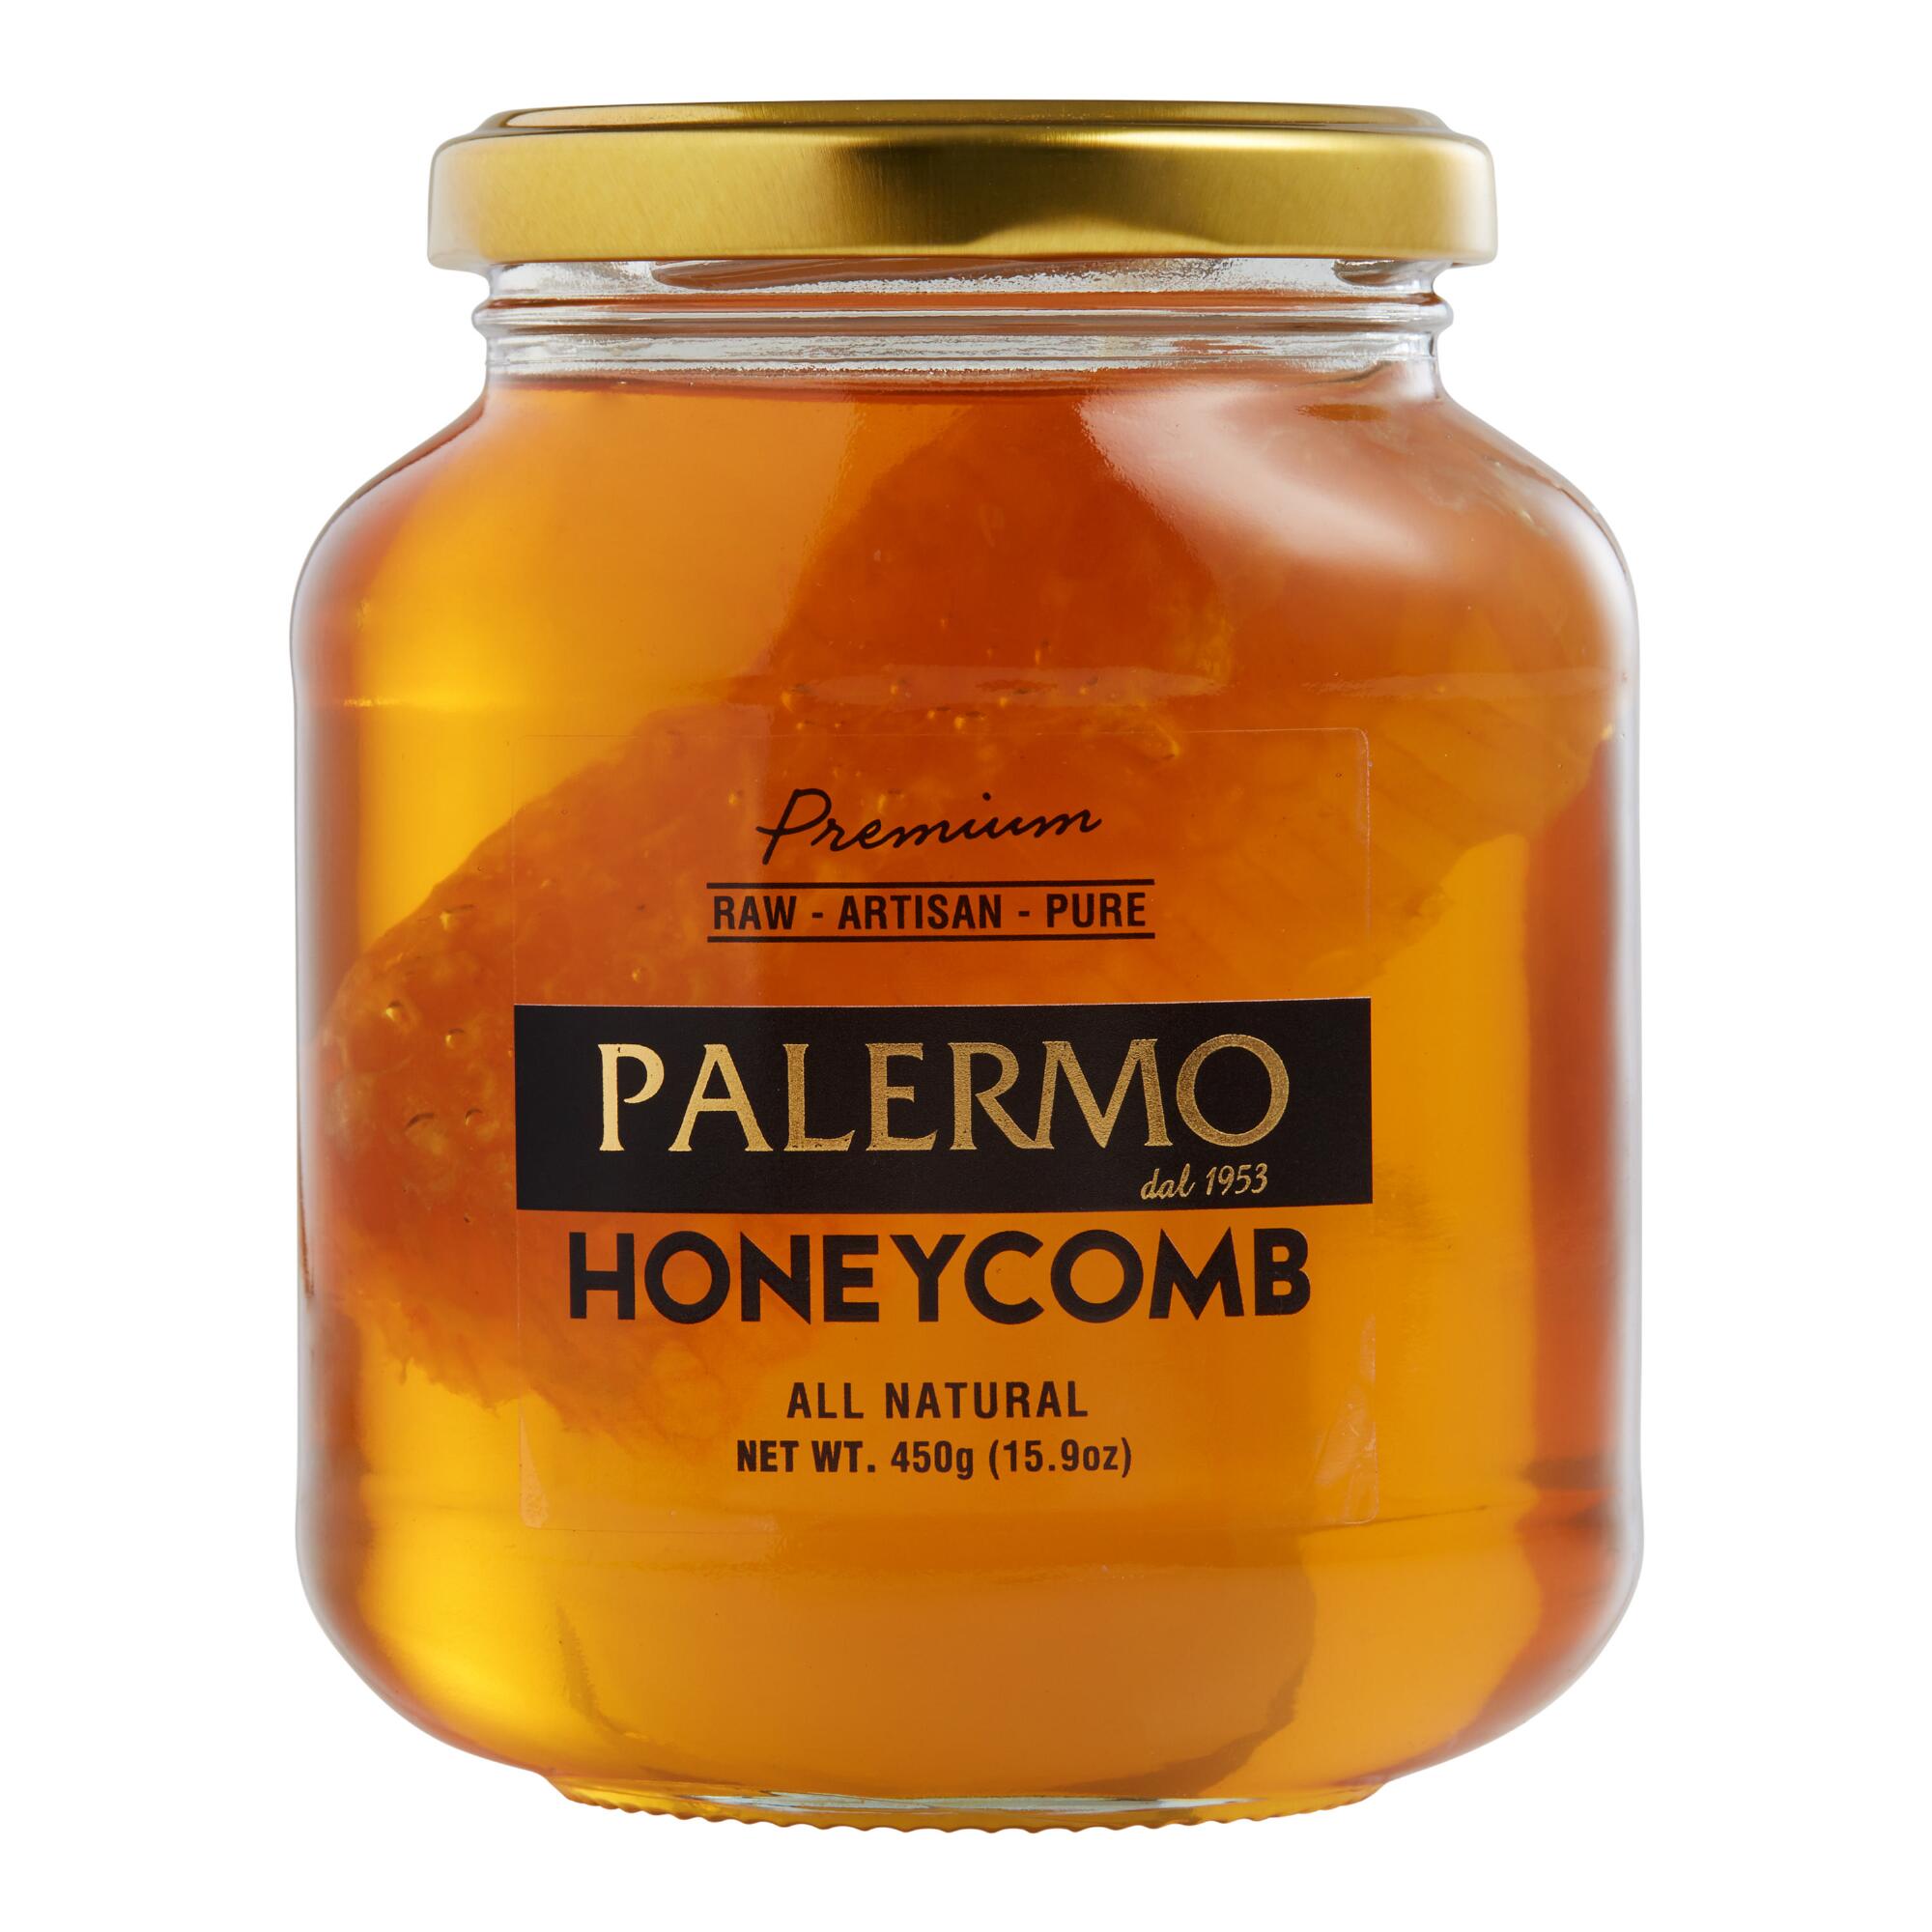 Palermo Honeycomb by World Market